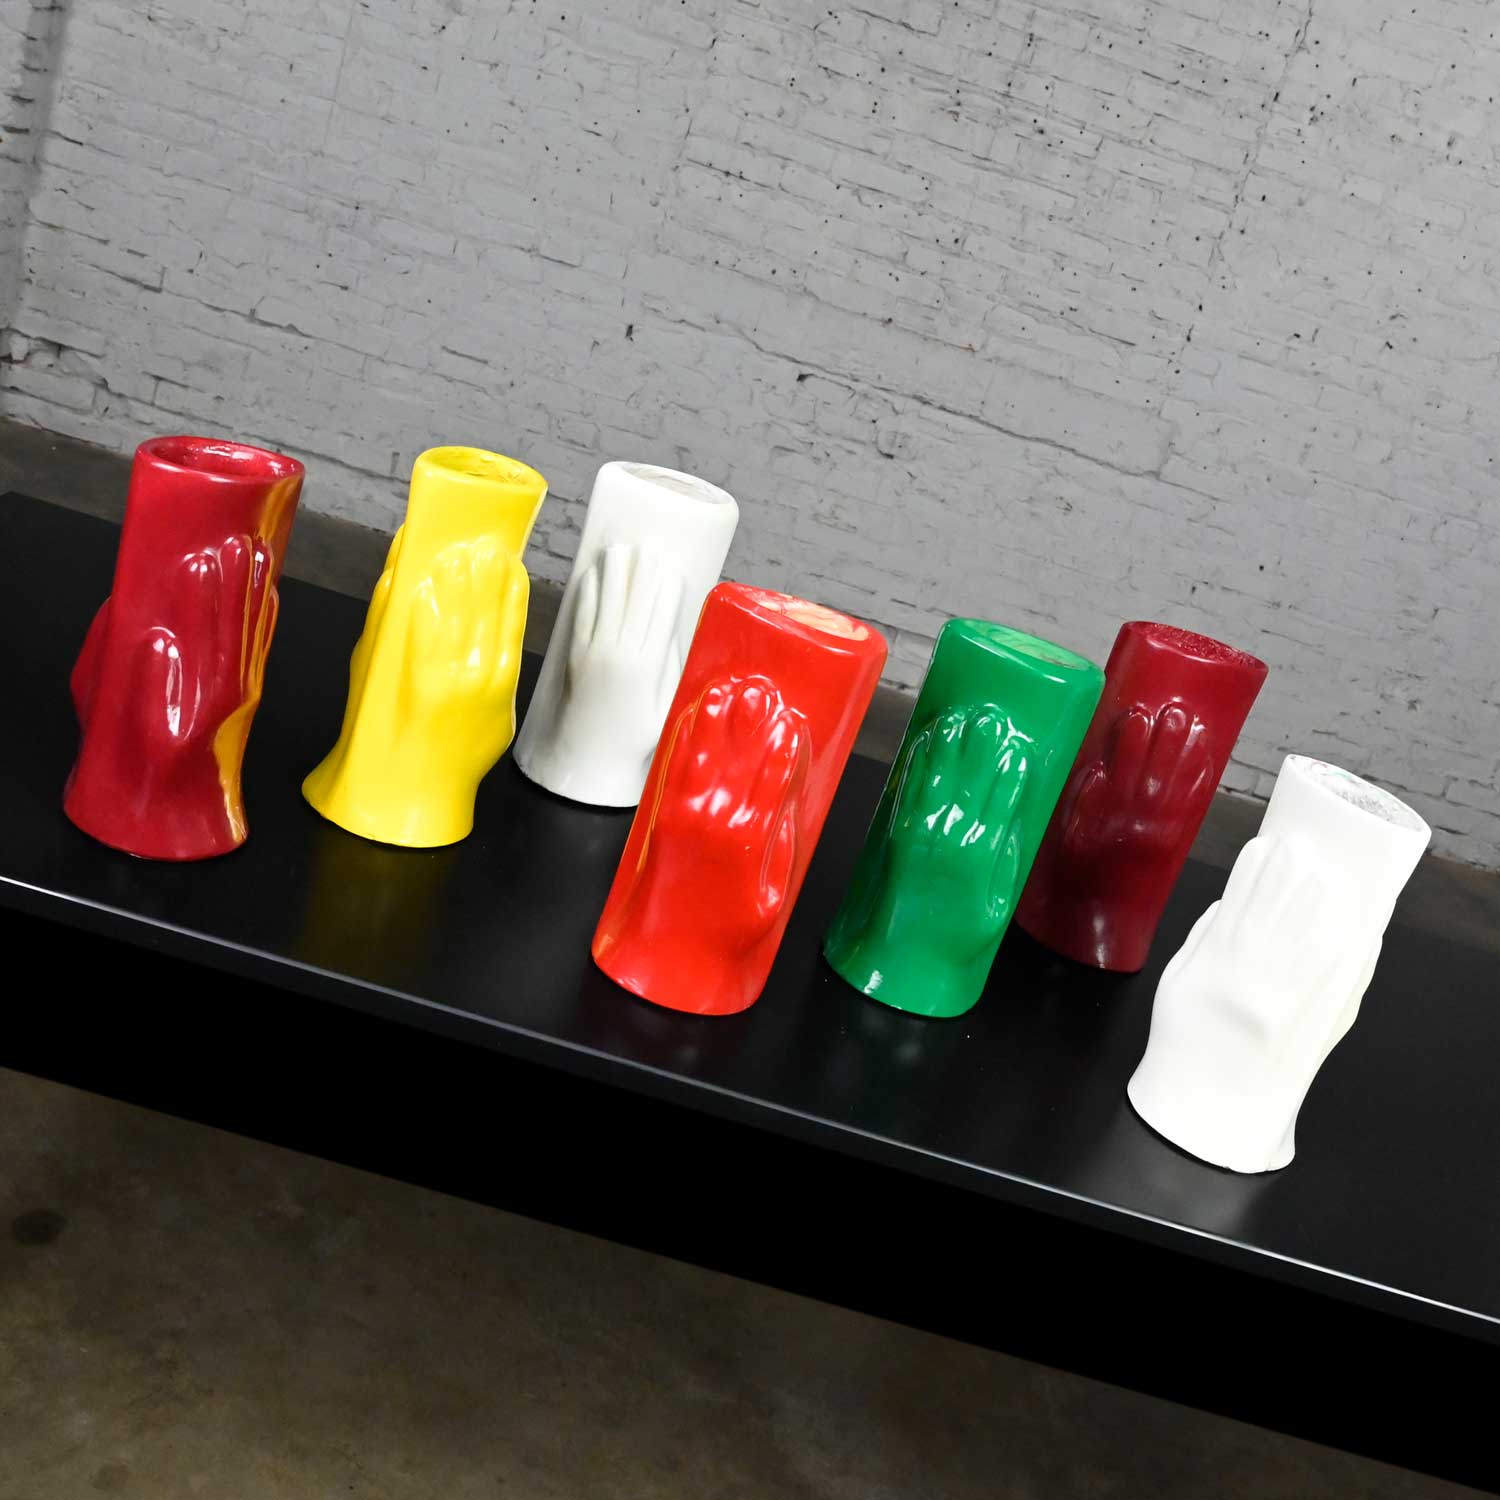 Folk Art Multi Color Molded Plastic or Acrylic Hand Vases Set of 7